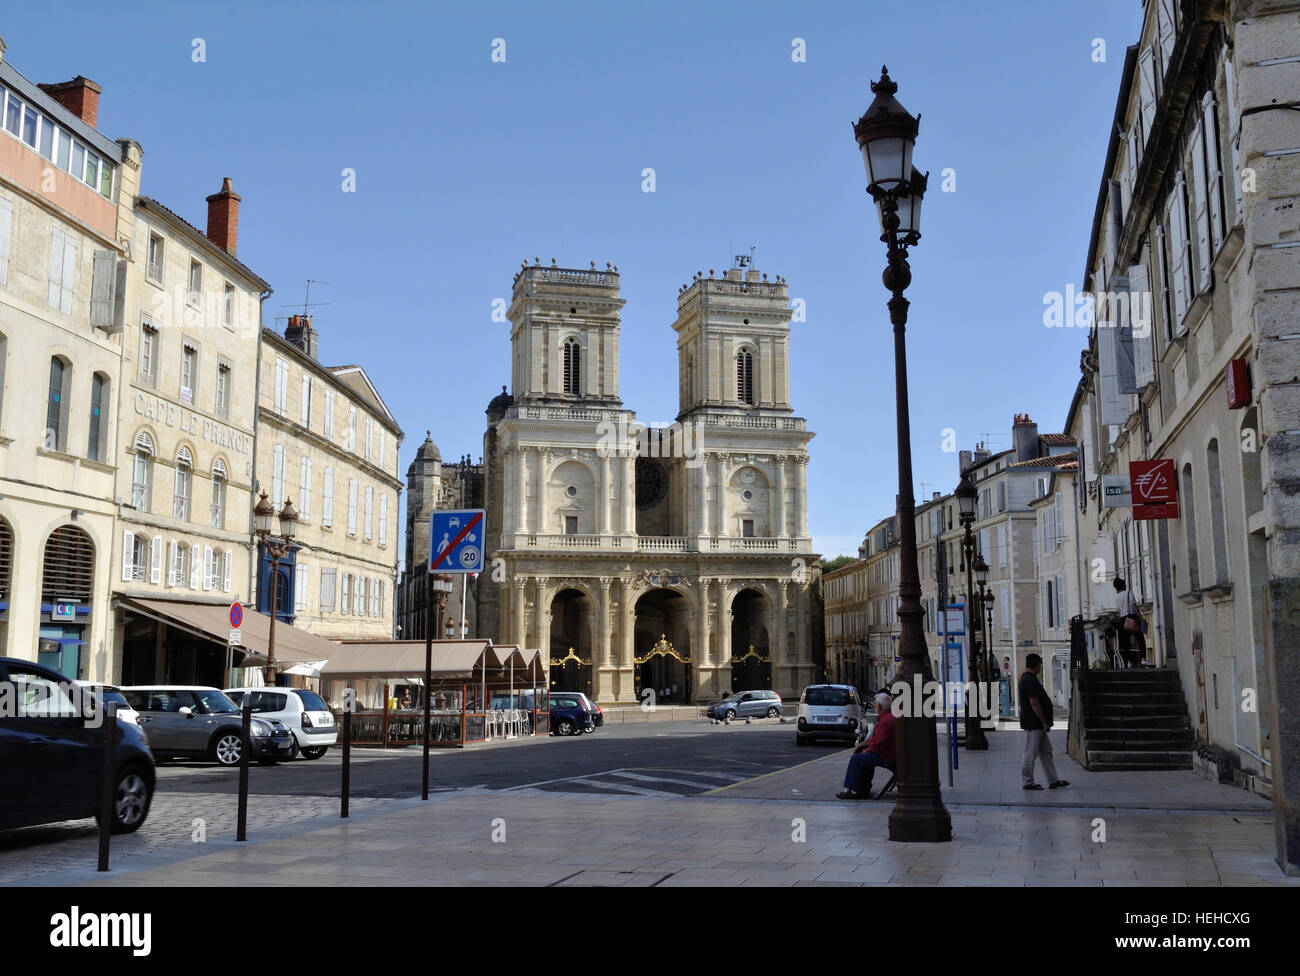 Vista a lo largo de la Rue de la république hacia la Catedral Sainte Marie d'Auch en la Place de la Republique, Auch, Francia. Foto de stock